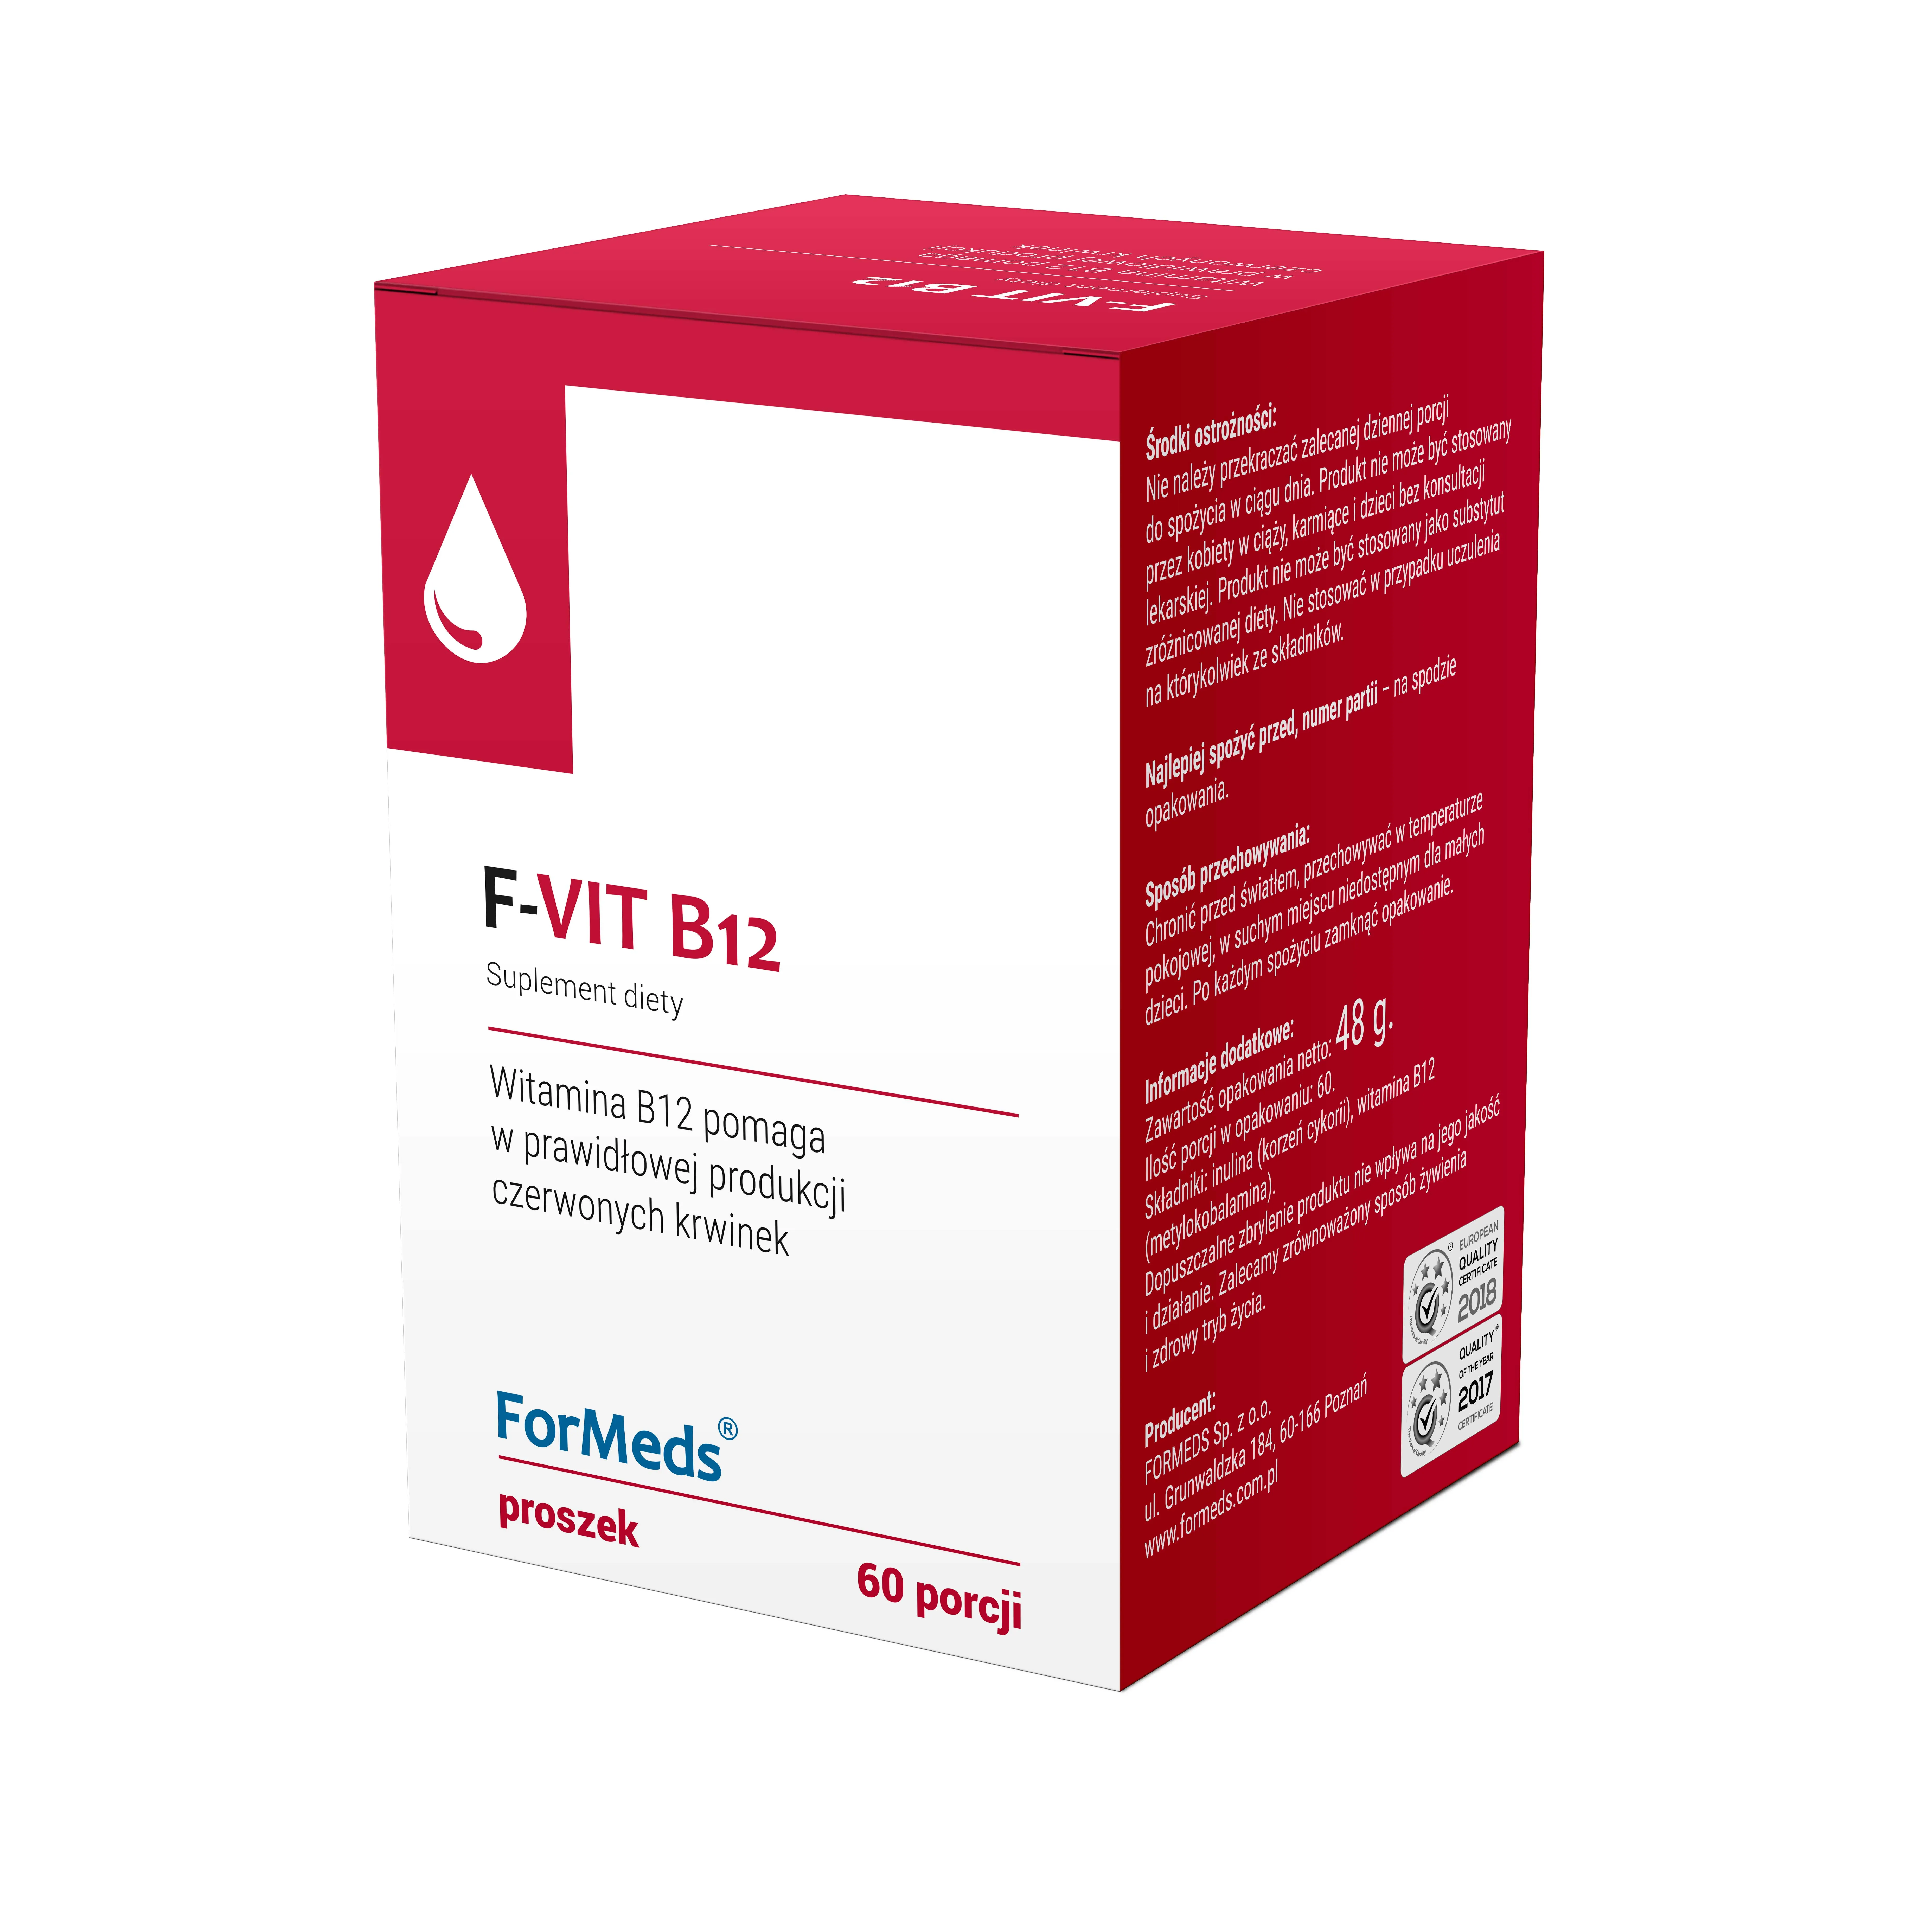 ForMeds F-VIT B12, suplement diety, proszek, 60 porcji